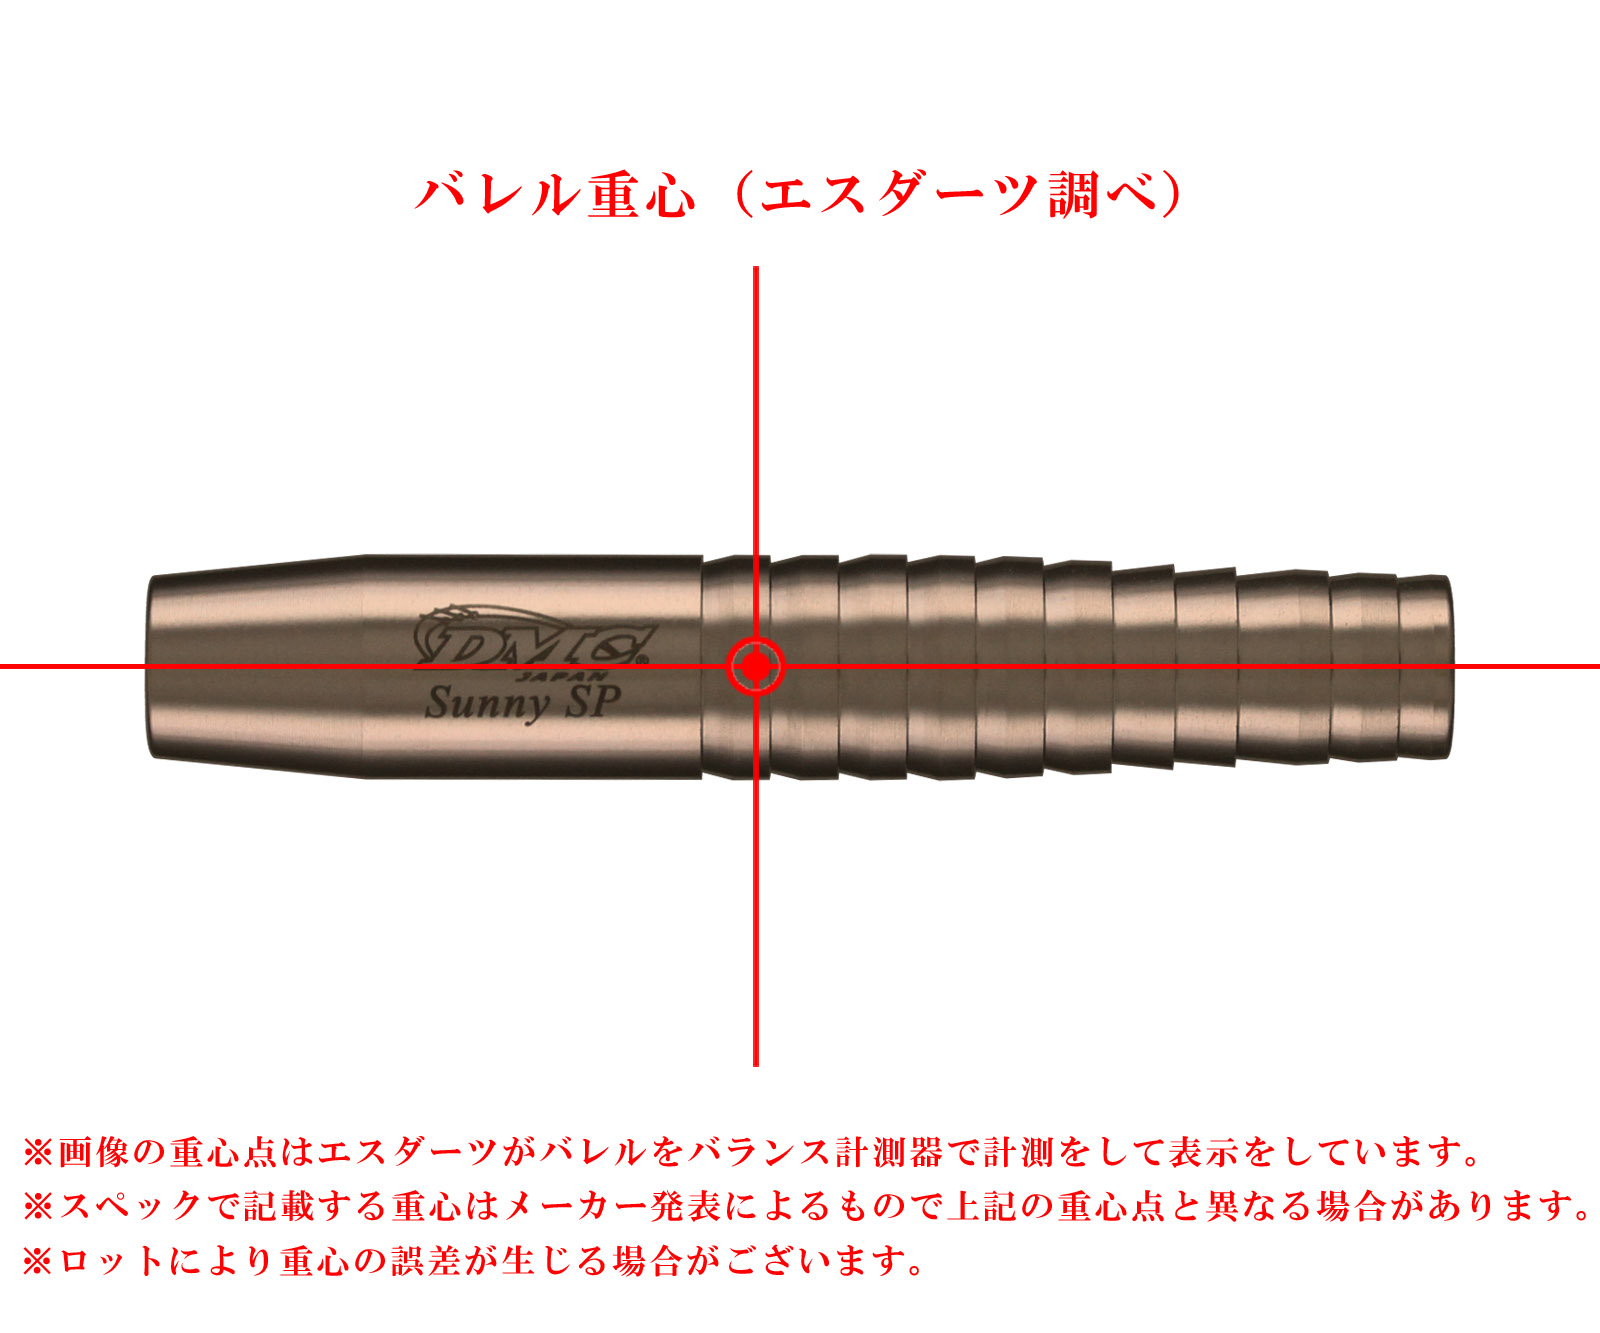 Darts & DMC & Soft-tip Darts | Darts Online Shop S-DARTS from JAPAN.